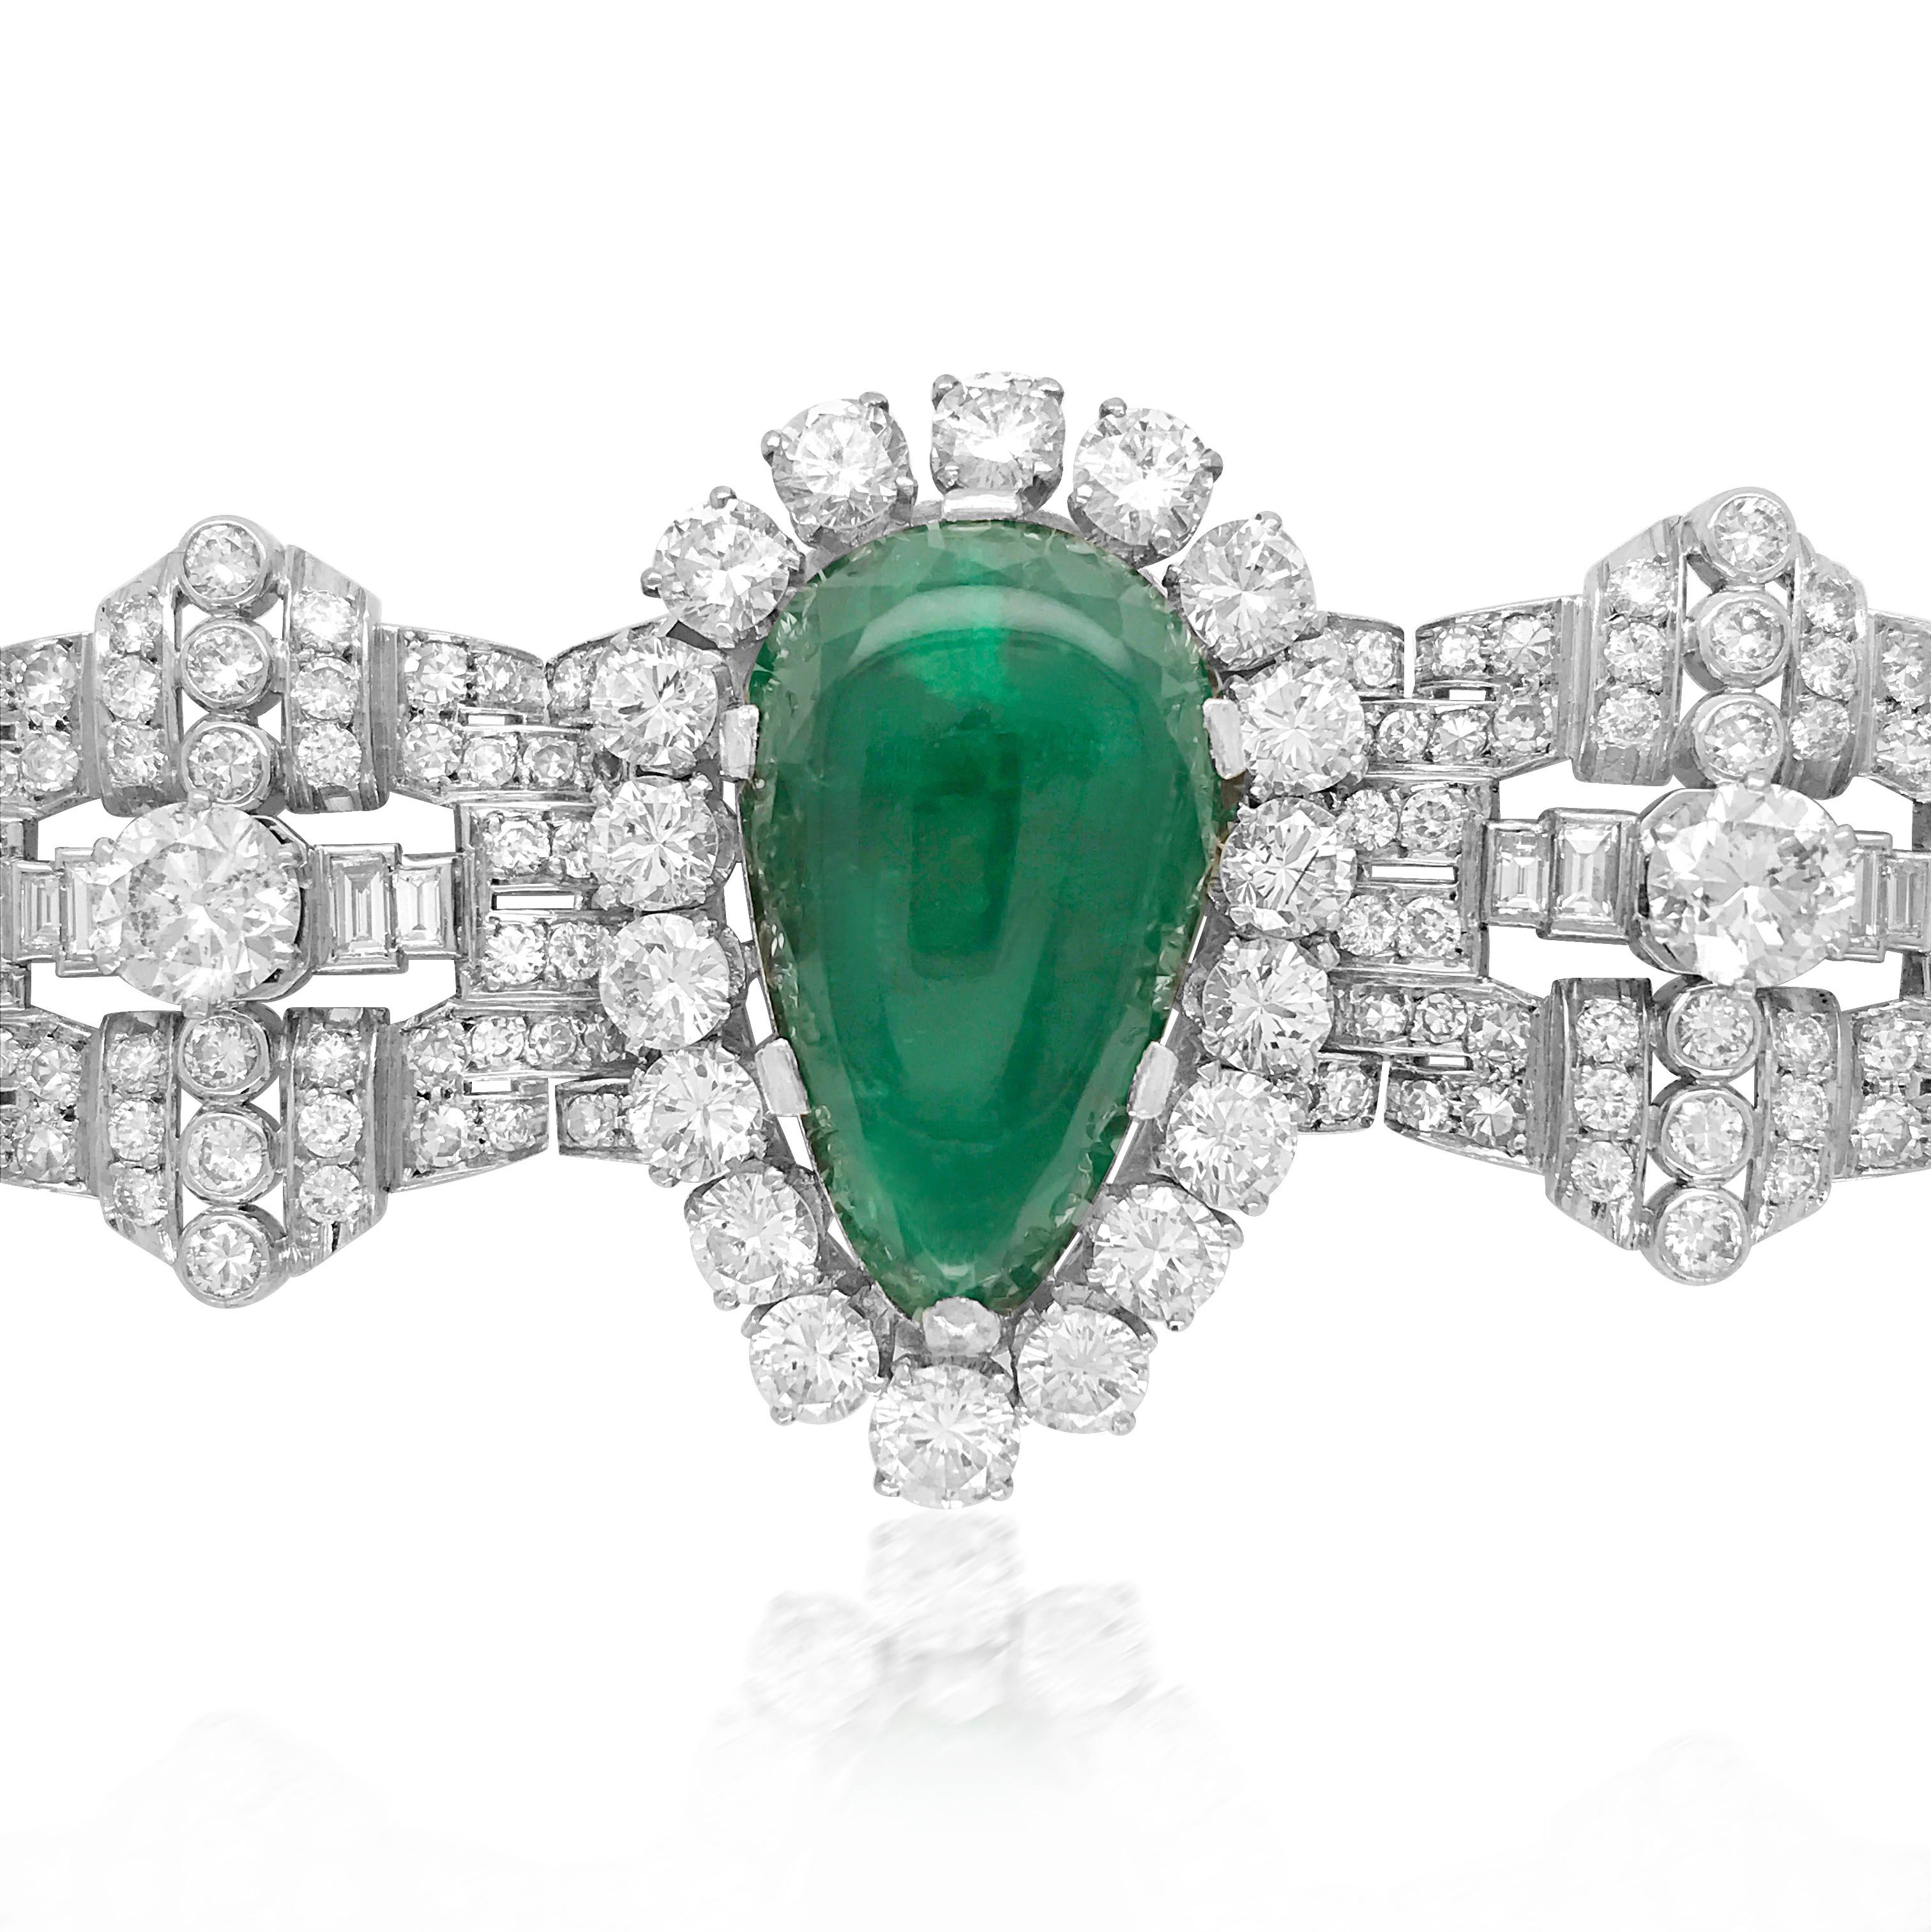 Pear-Shaped 23 Carat Emerald Bracelet, Platinum and Diamond, Clerc For Sale 2